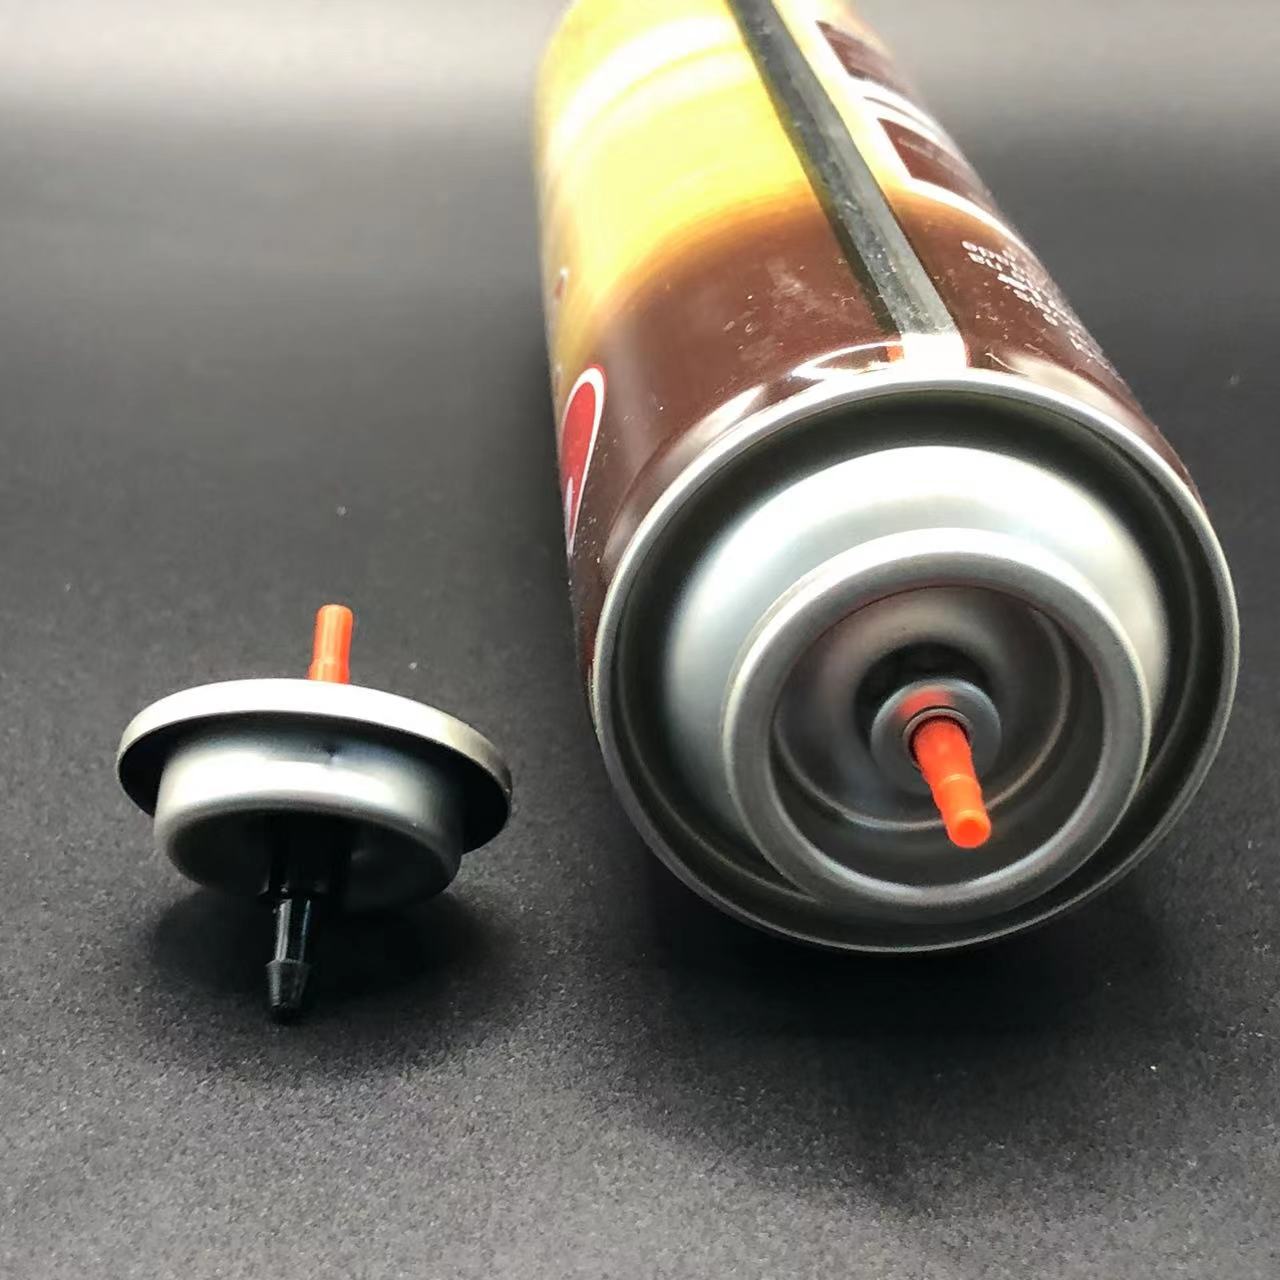 Universal Butane Gas Lighter Refill Kit Kit ដំណោះស្រាយល្អសម្រាប់គ្រប់ម៉ូដែលស្រាលជាងមុន